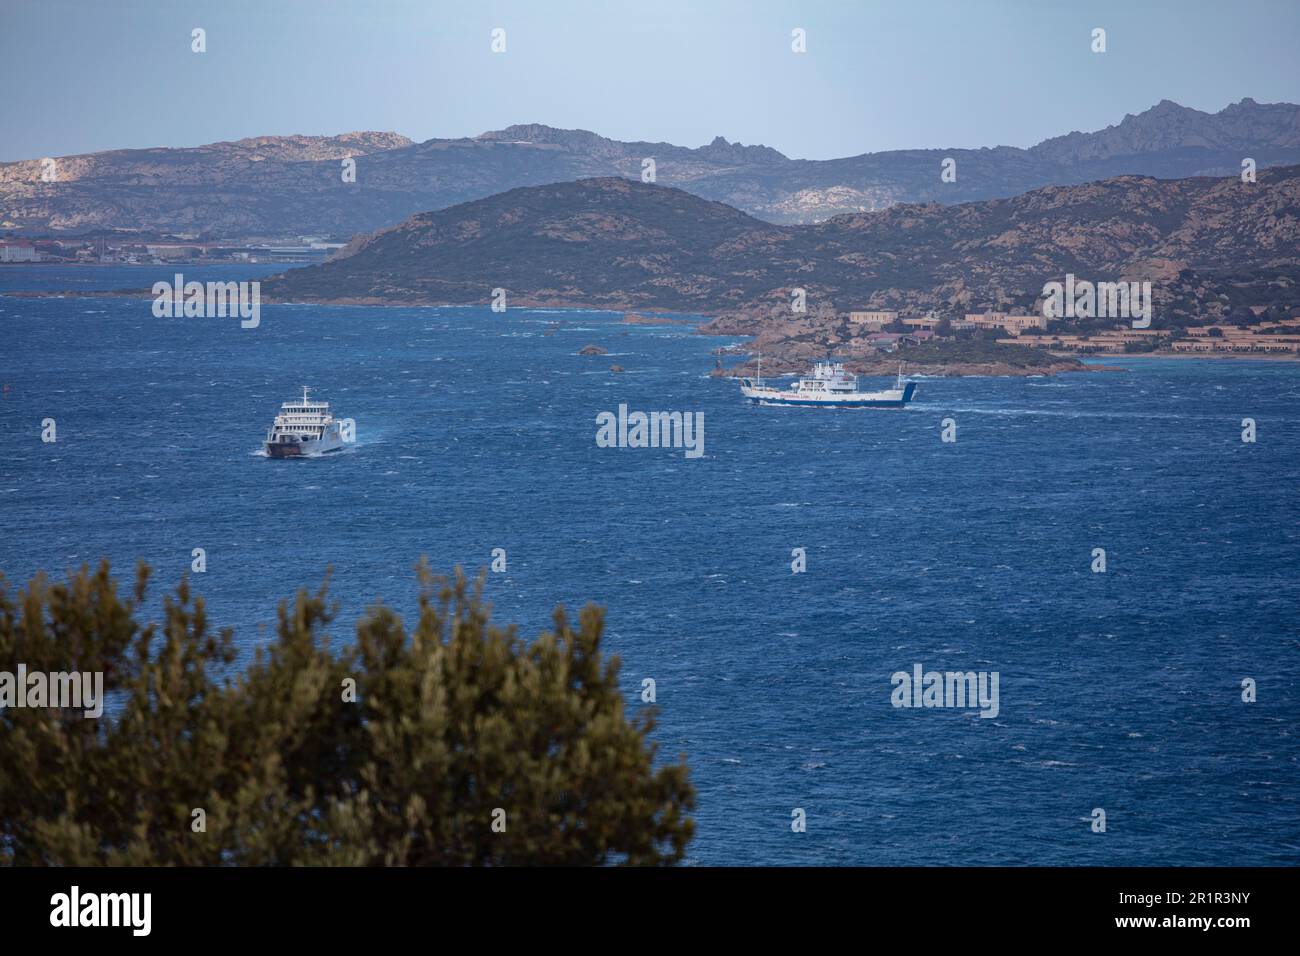 Italy, Sardinia, Palau, rough sea, car ferries Stock Photo